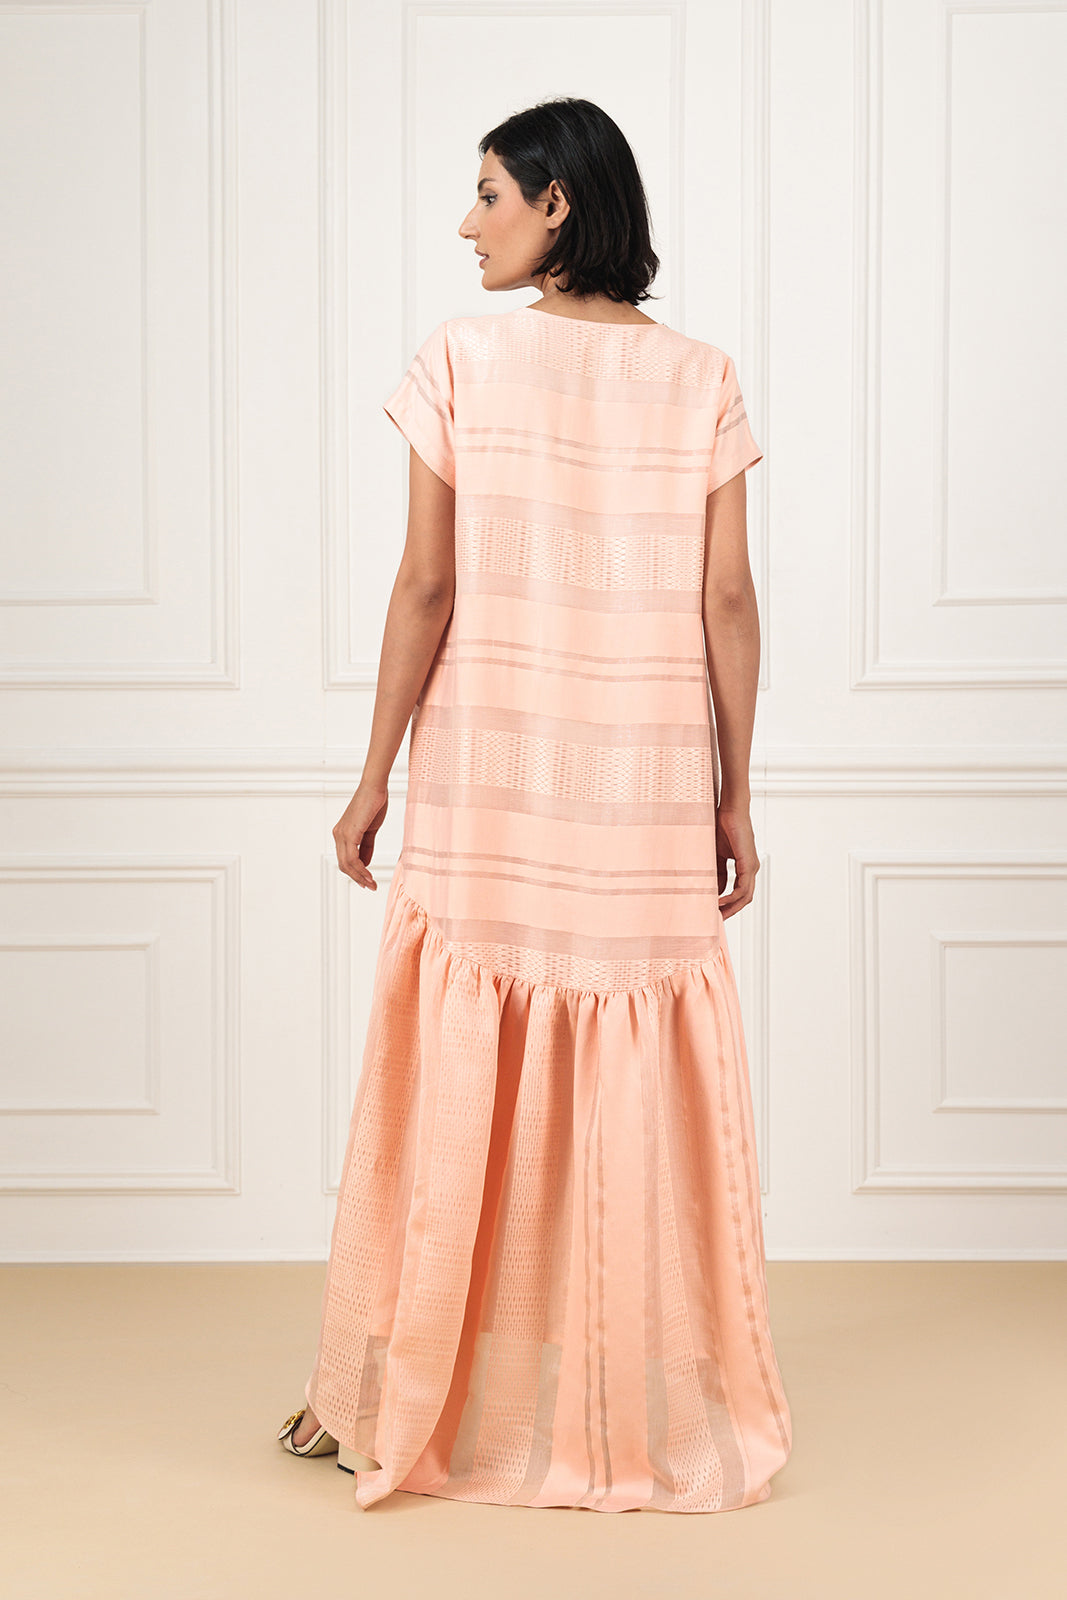 Textured Organza dress